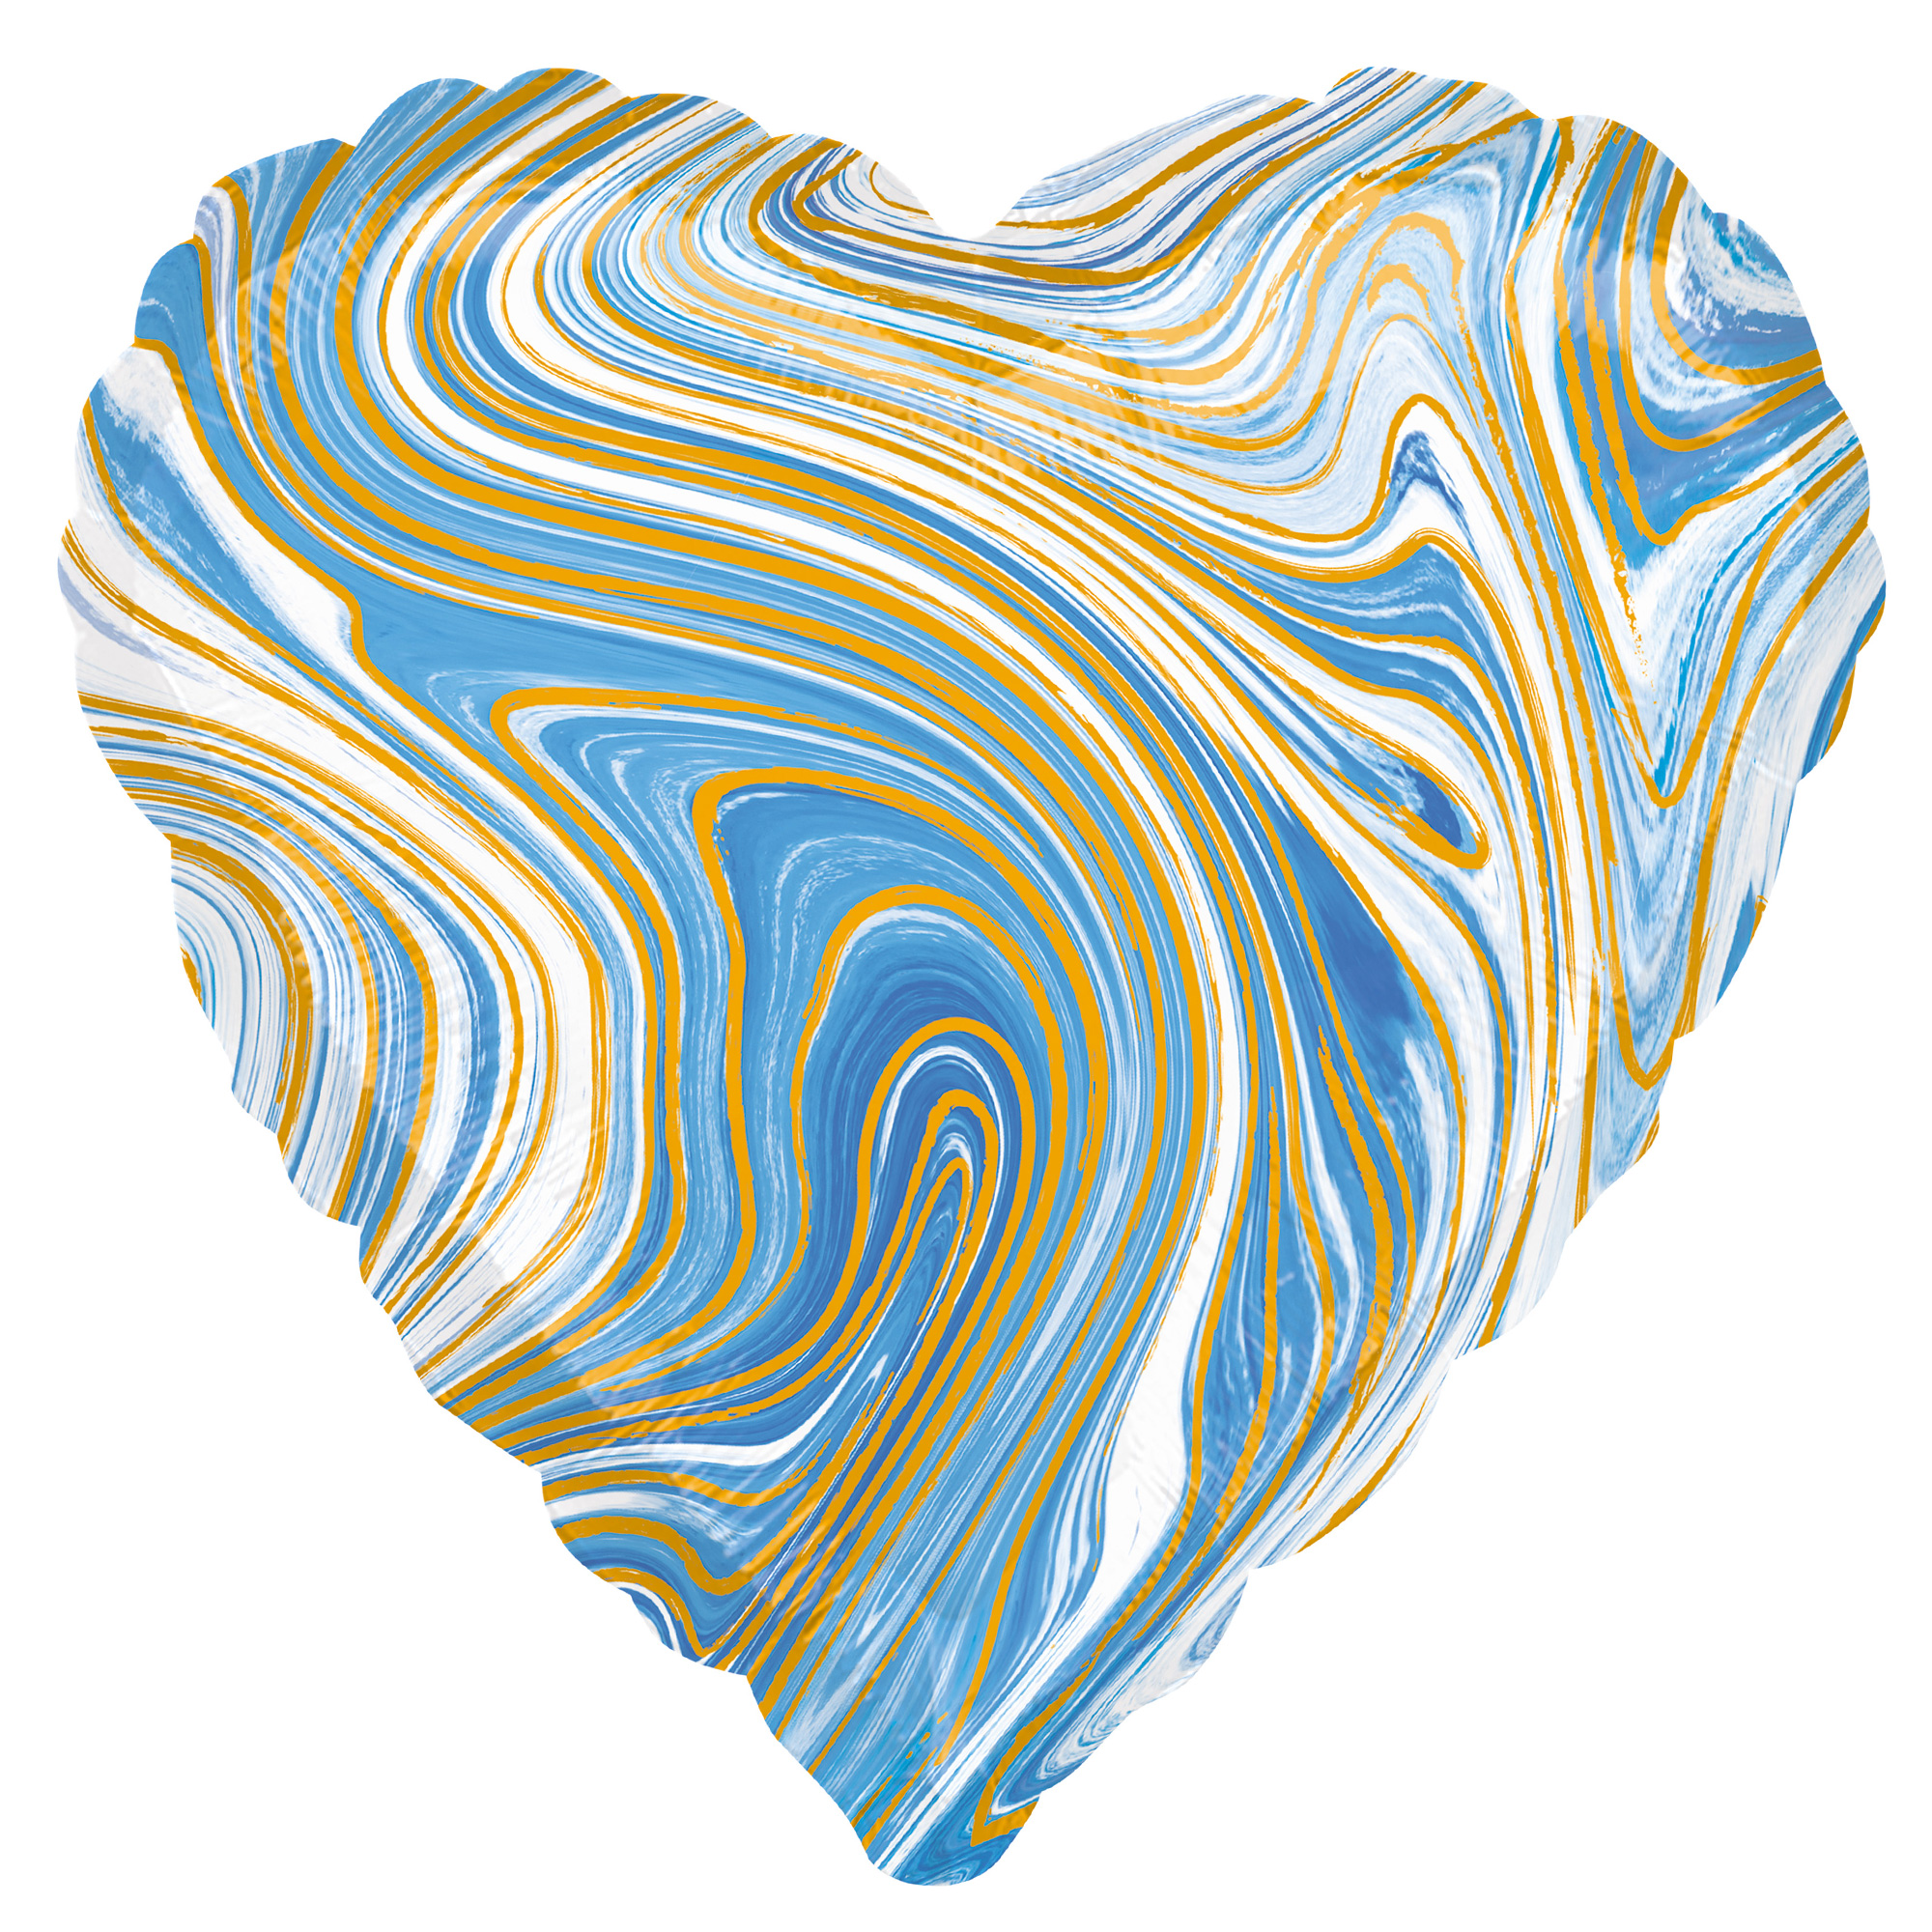 Blue Heart Marble-Effect 17-Inch Foil Helium Balloon